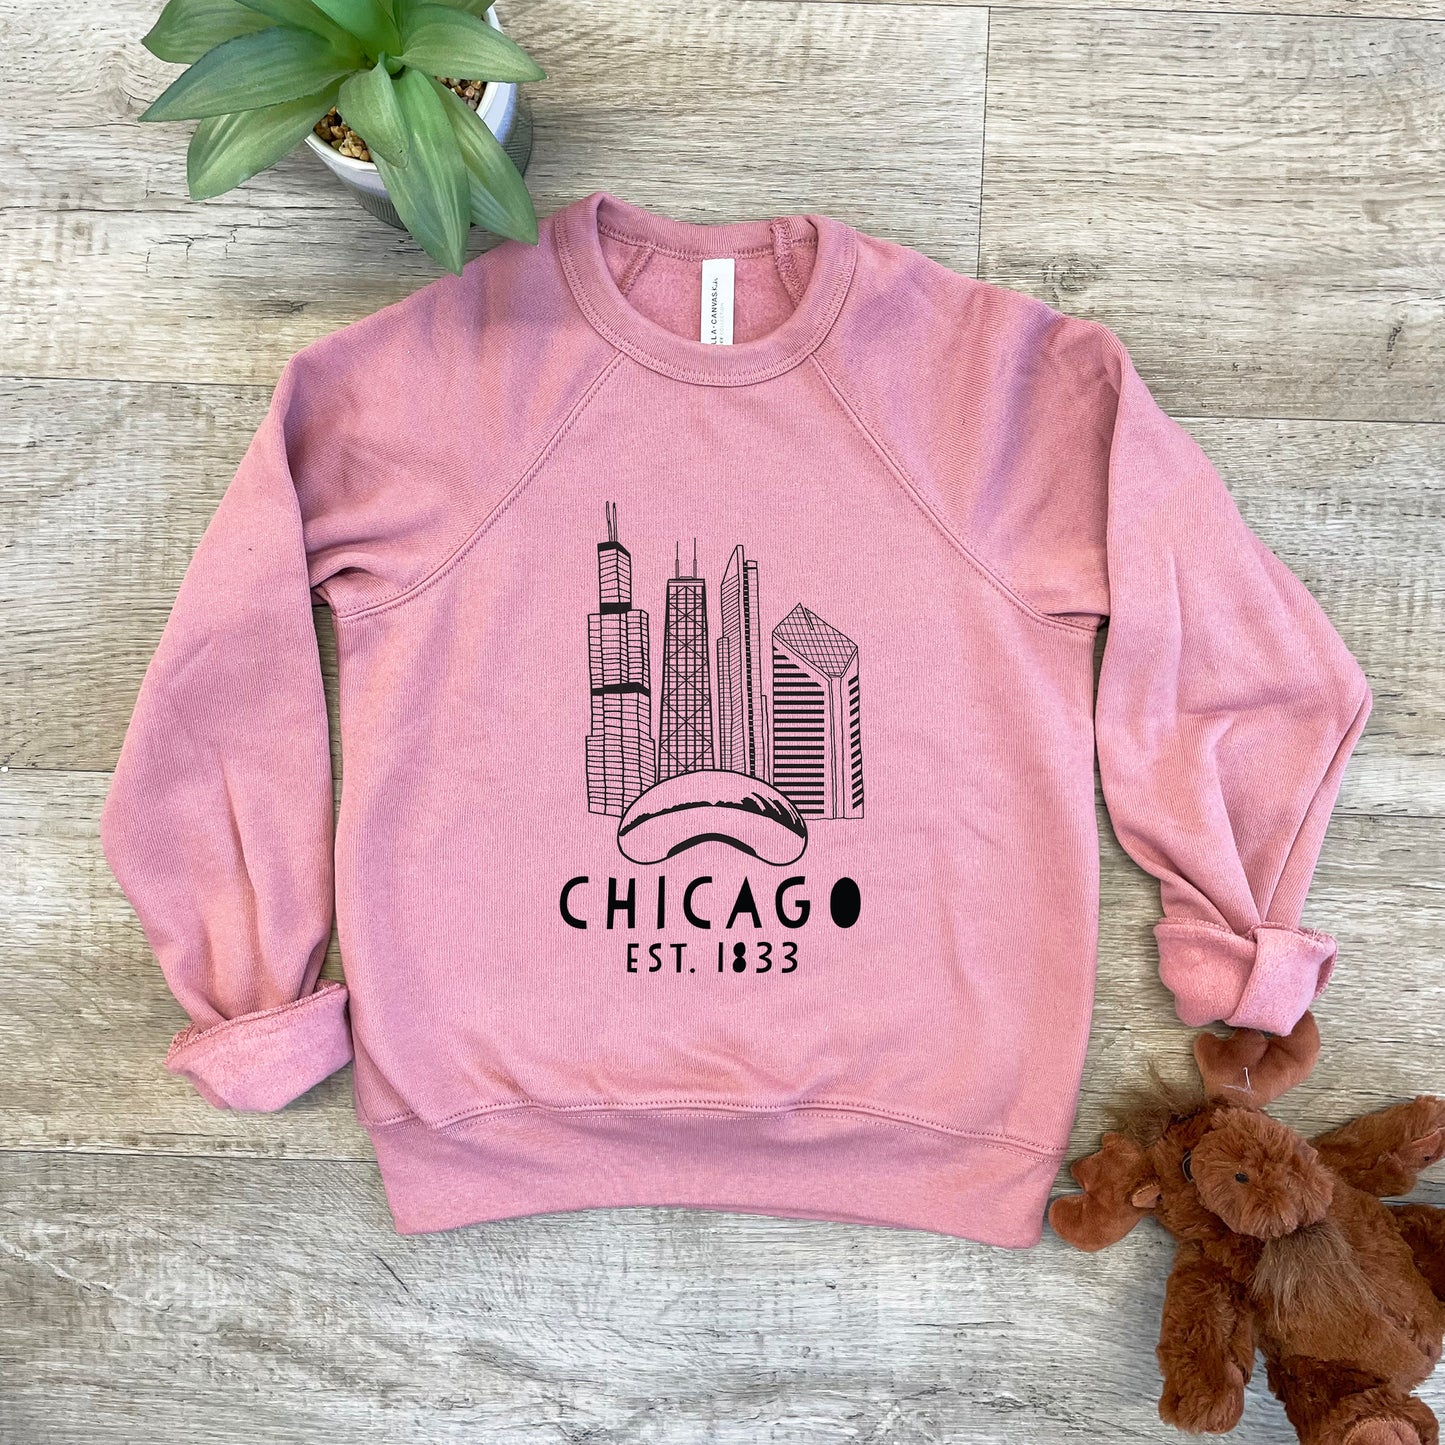 Chicago Skyline - Kid's Sweatshirt - Heather Gray or Mauve